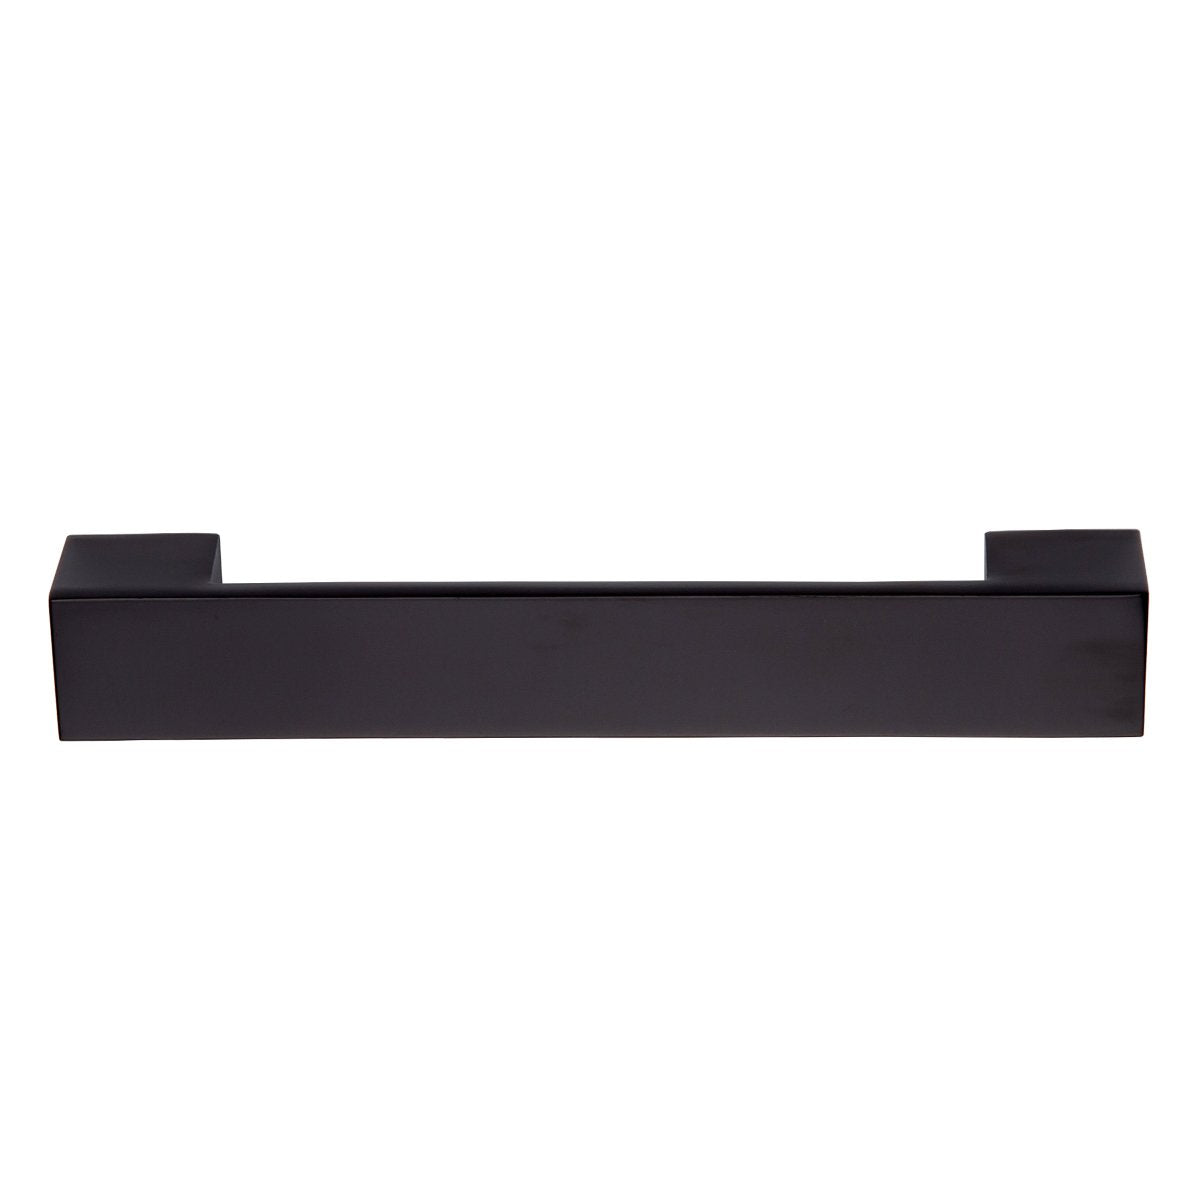 Amazon Basics Short Modern Cabinet Pull Handle, 6.38-inch Length (5-inch Hole Center), Flat Black, 10-Pack - Like New